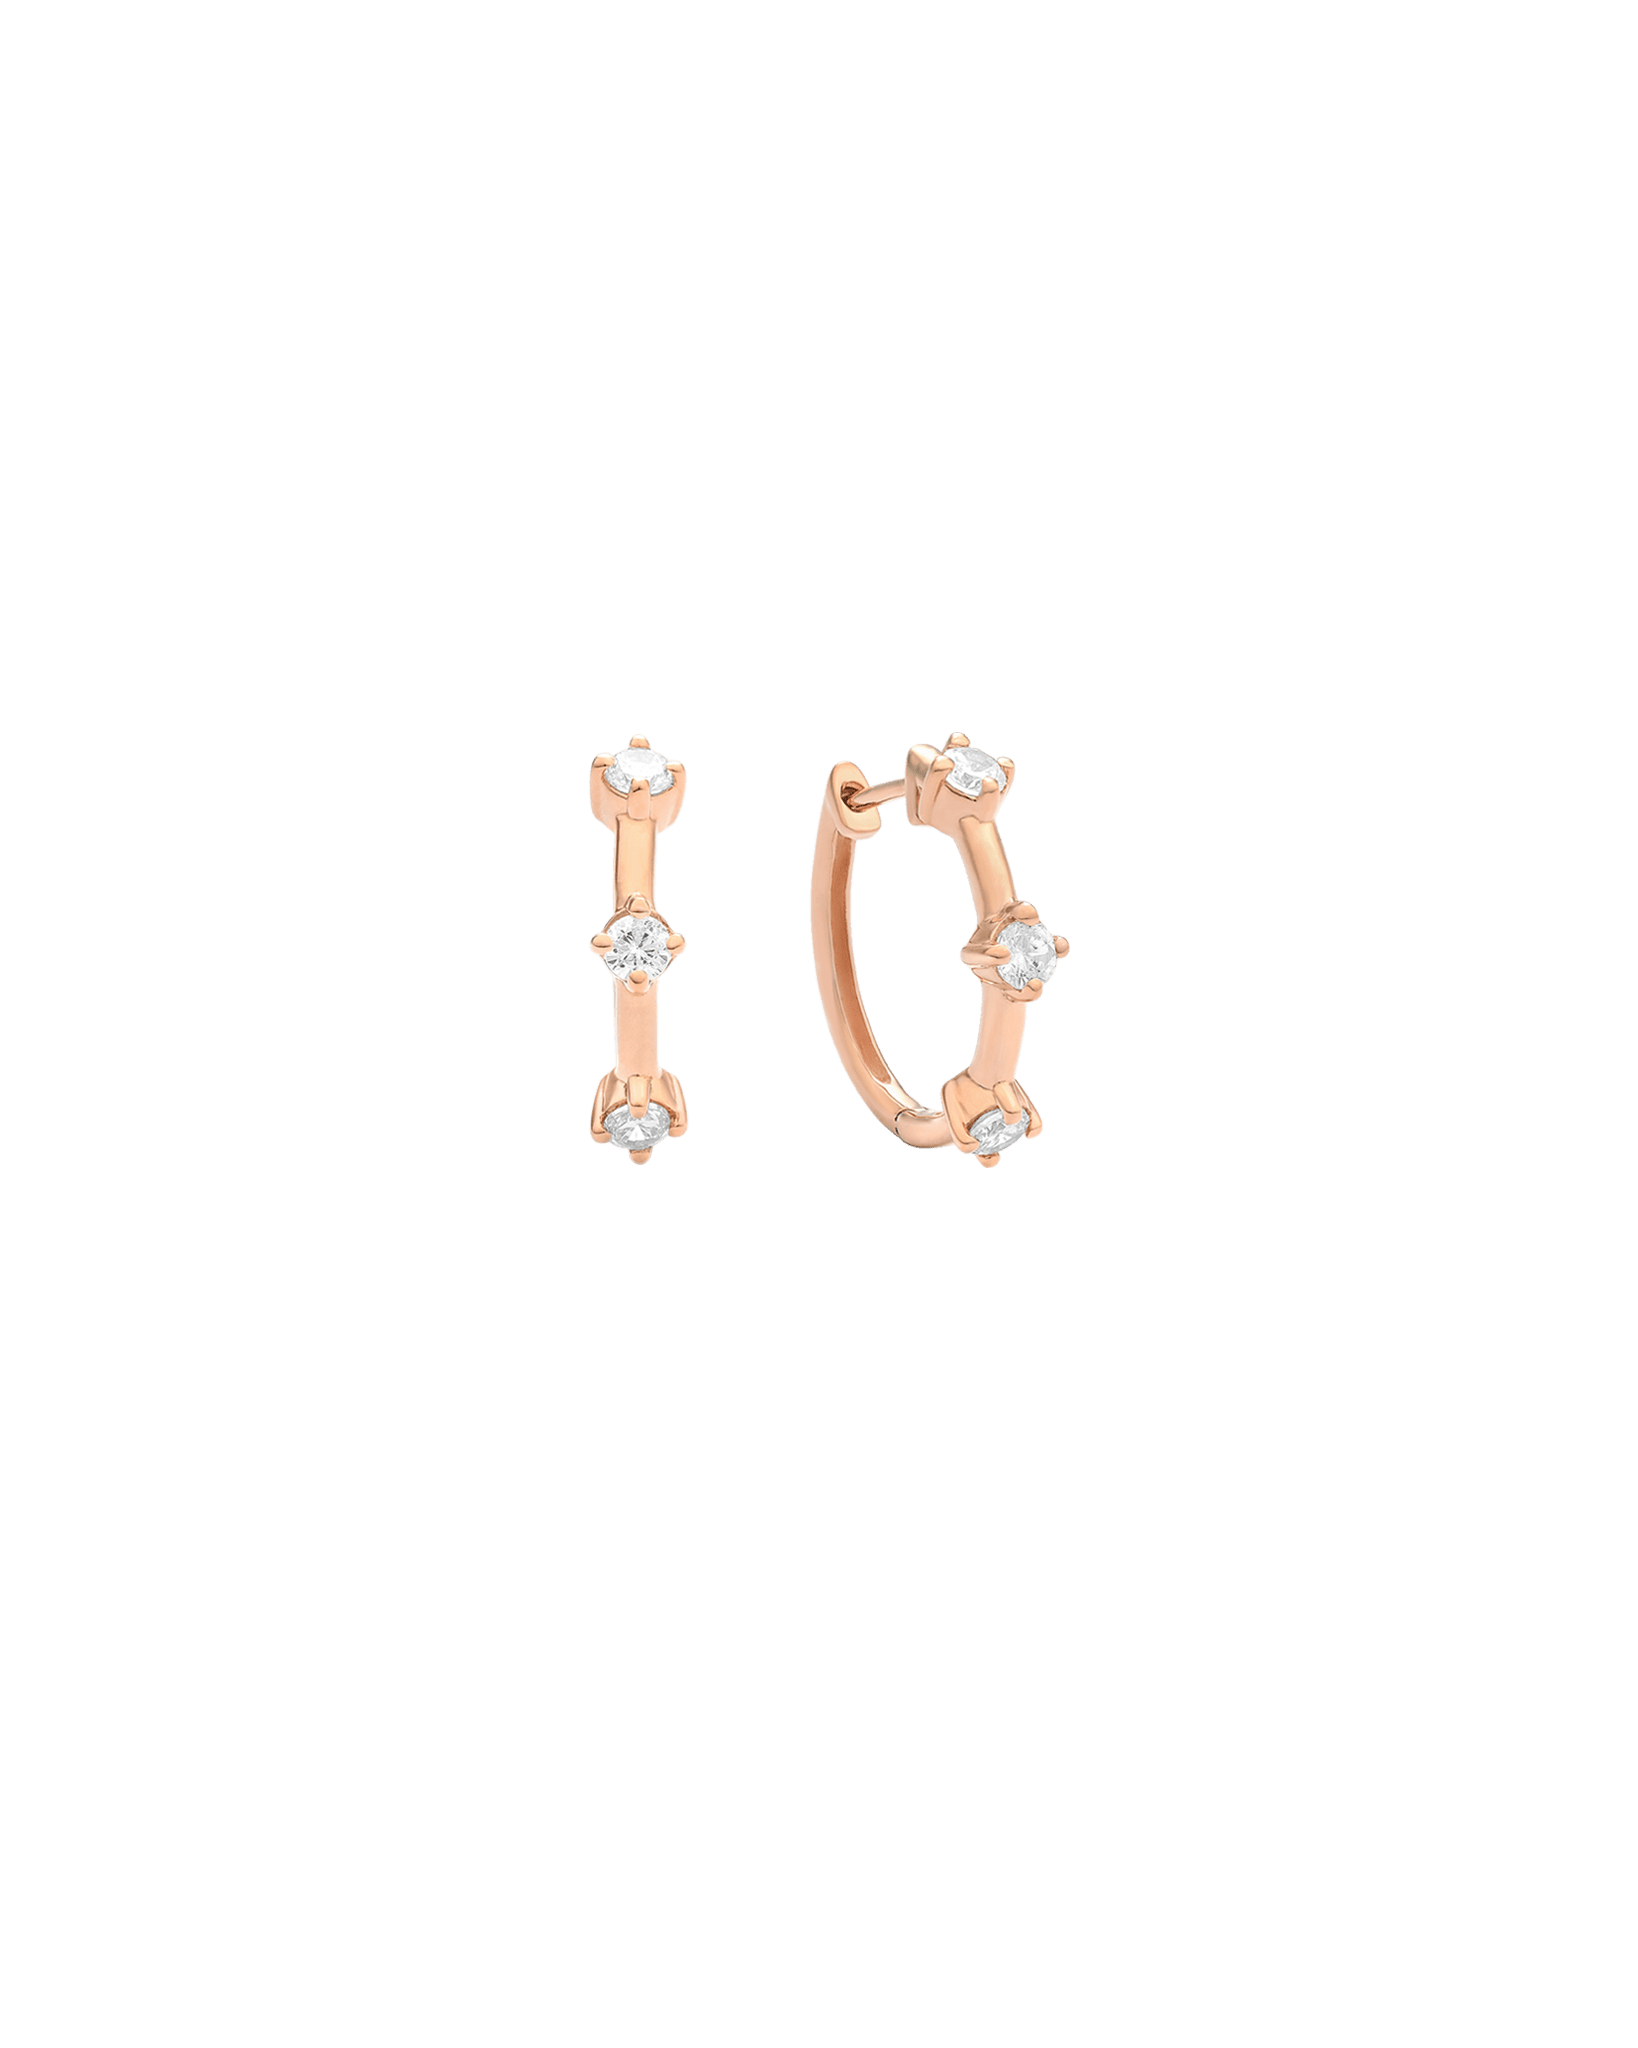 Triple Diamond Hoops - 14K White Gold Earrings magal-dev 